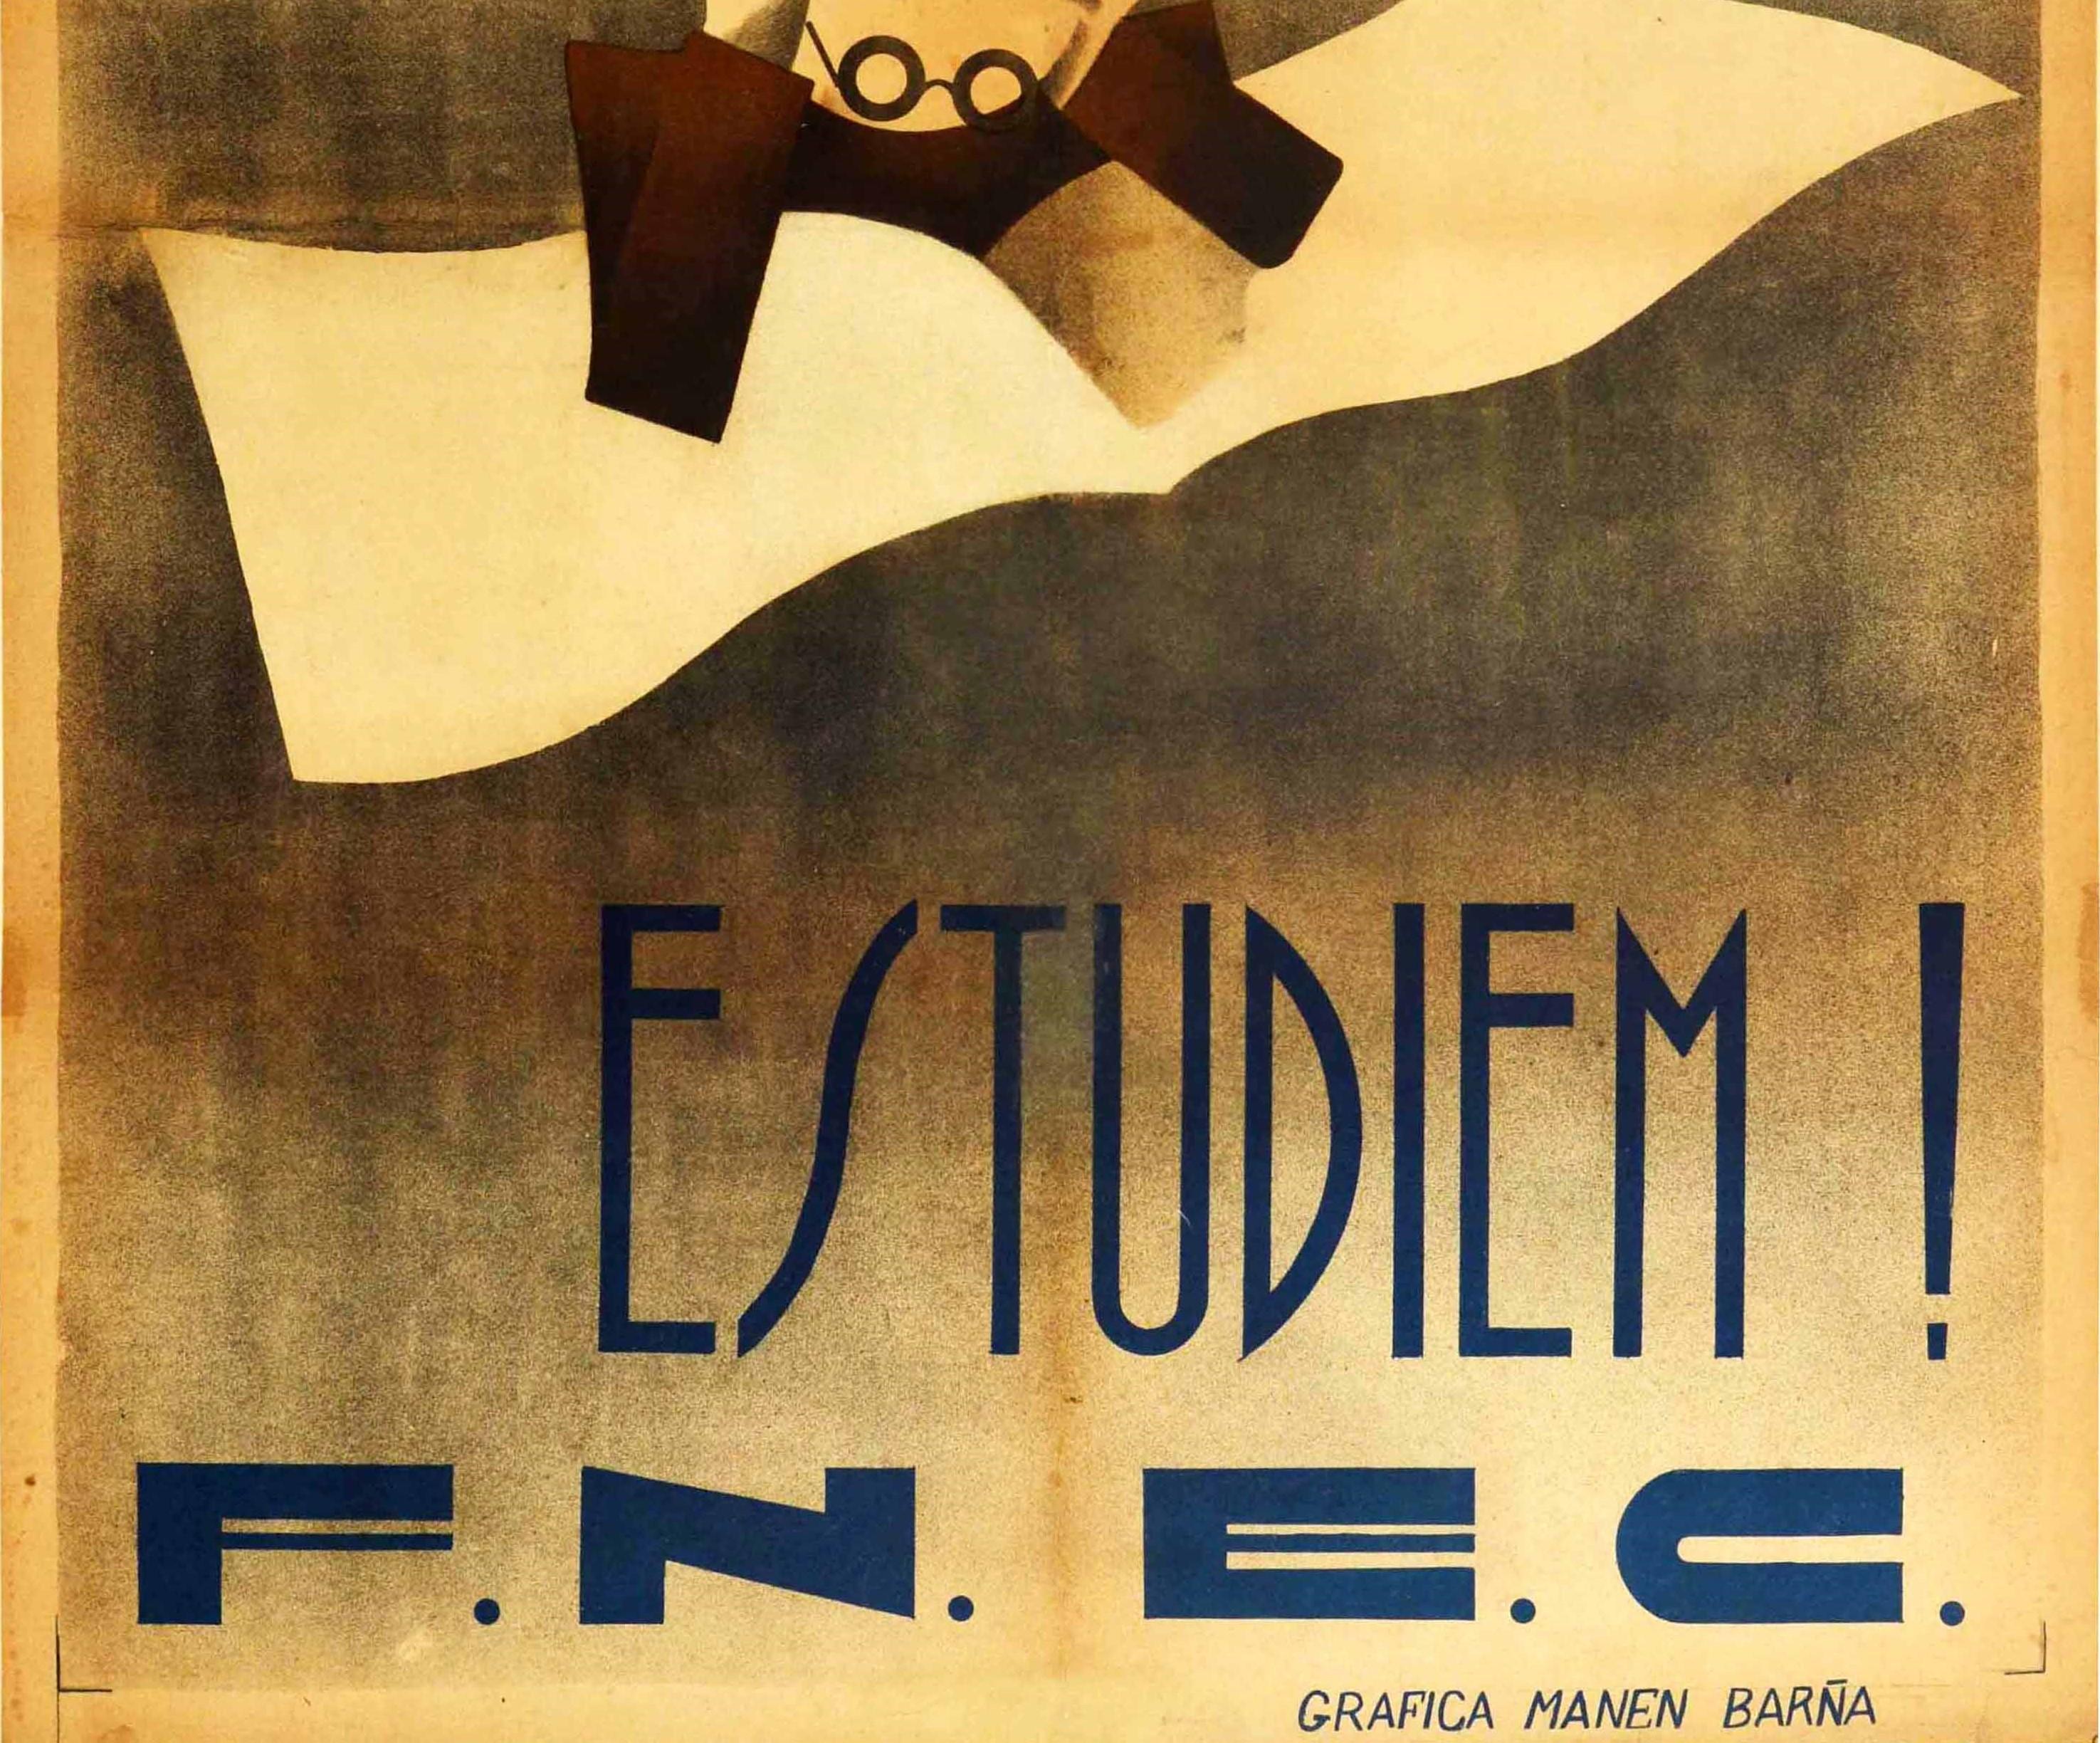 student propaganda posters